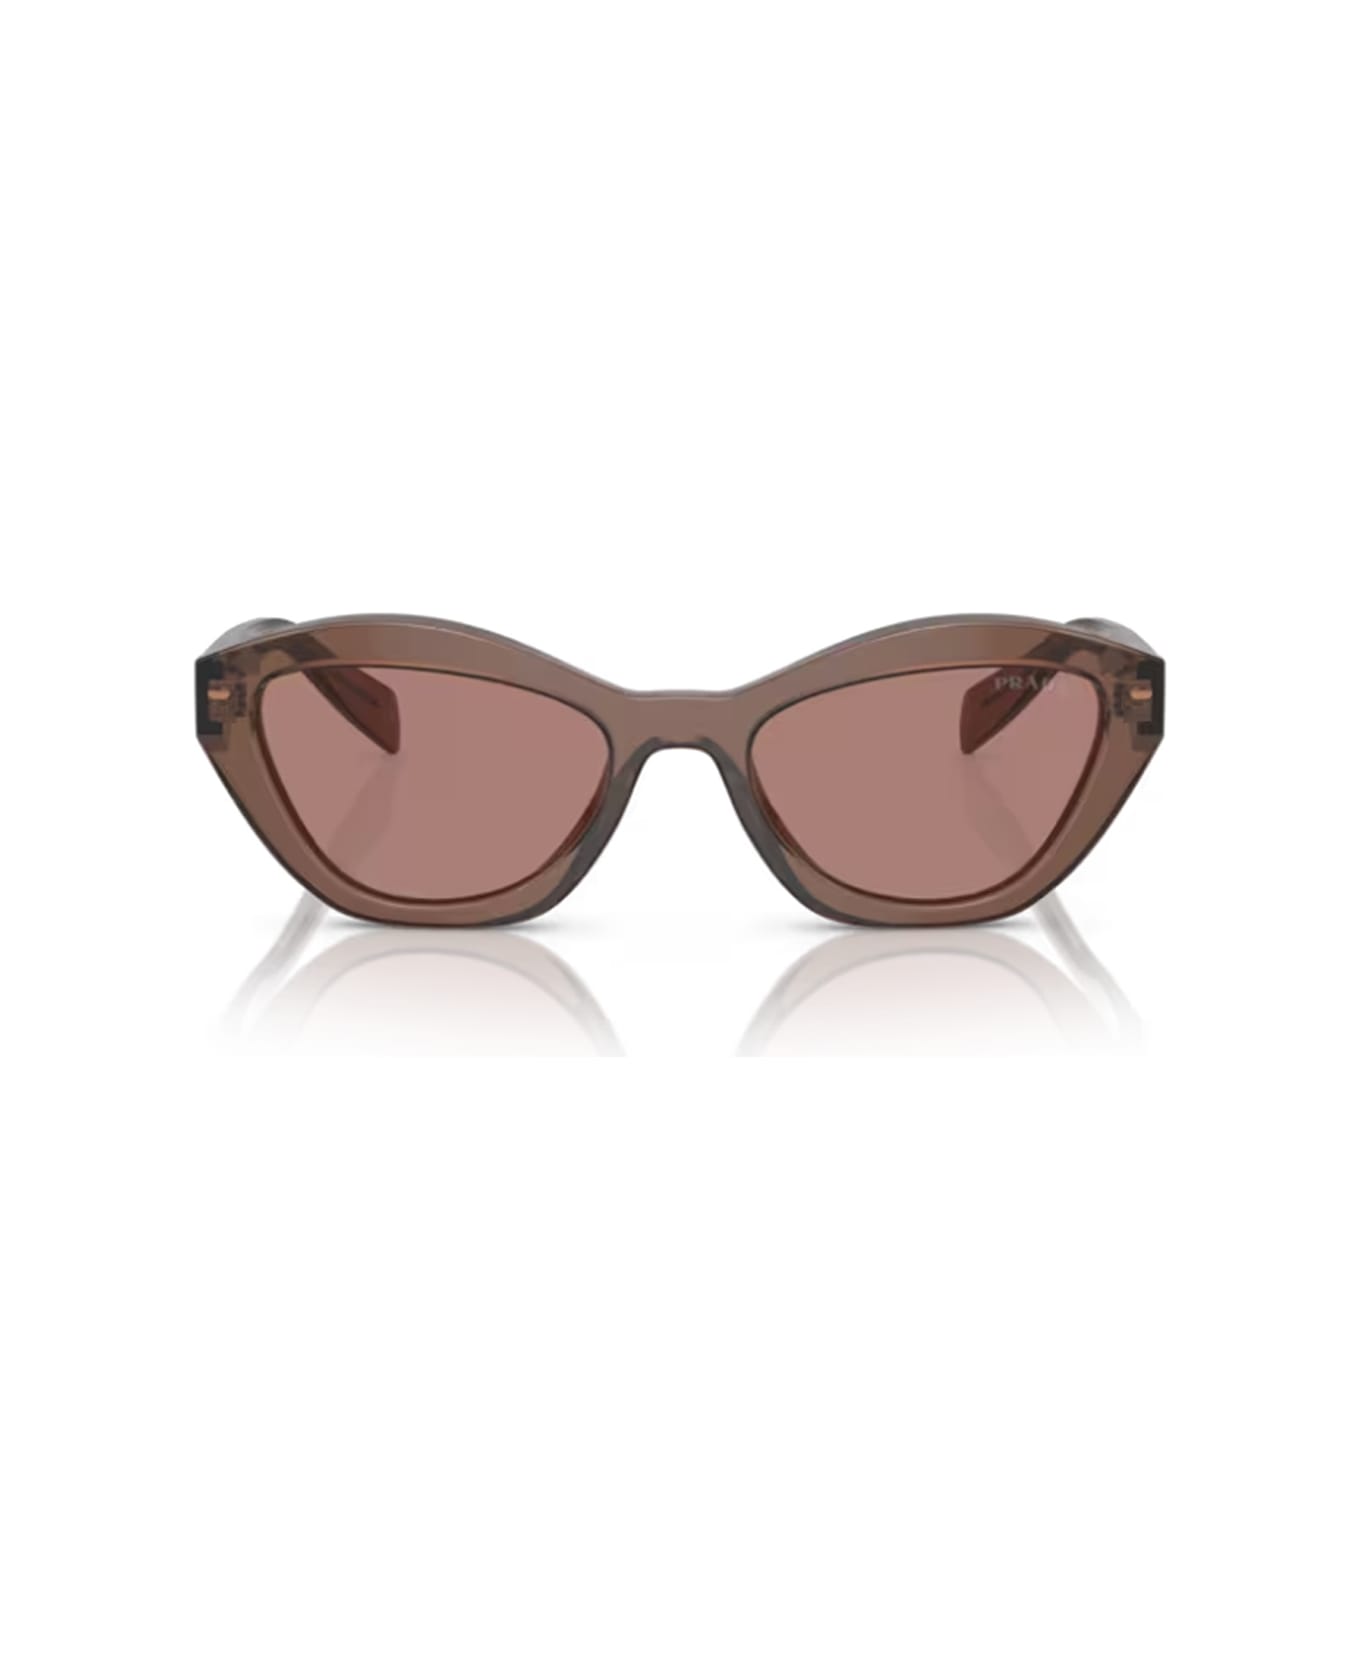 Prada Eyewear Pra02s 17o60b Sunglasses - Marrone